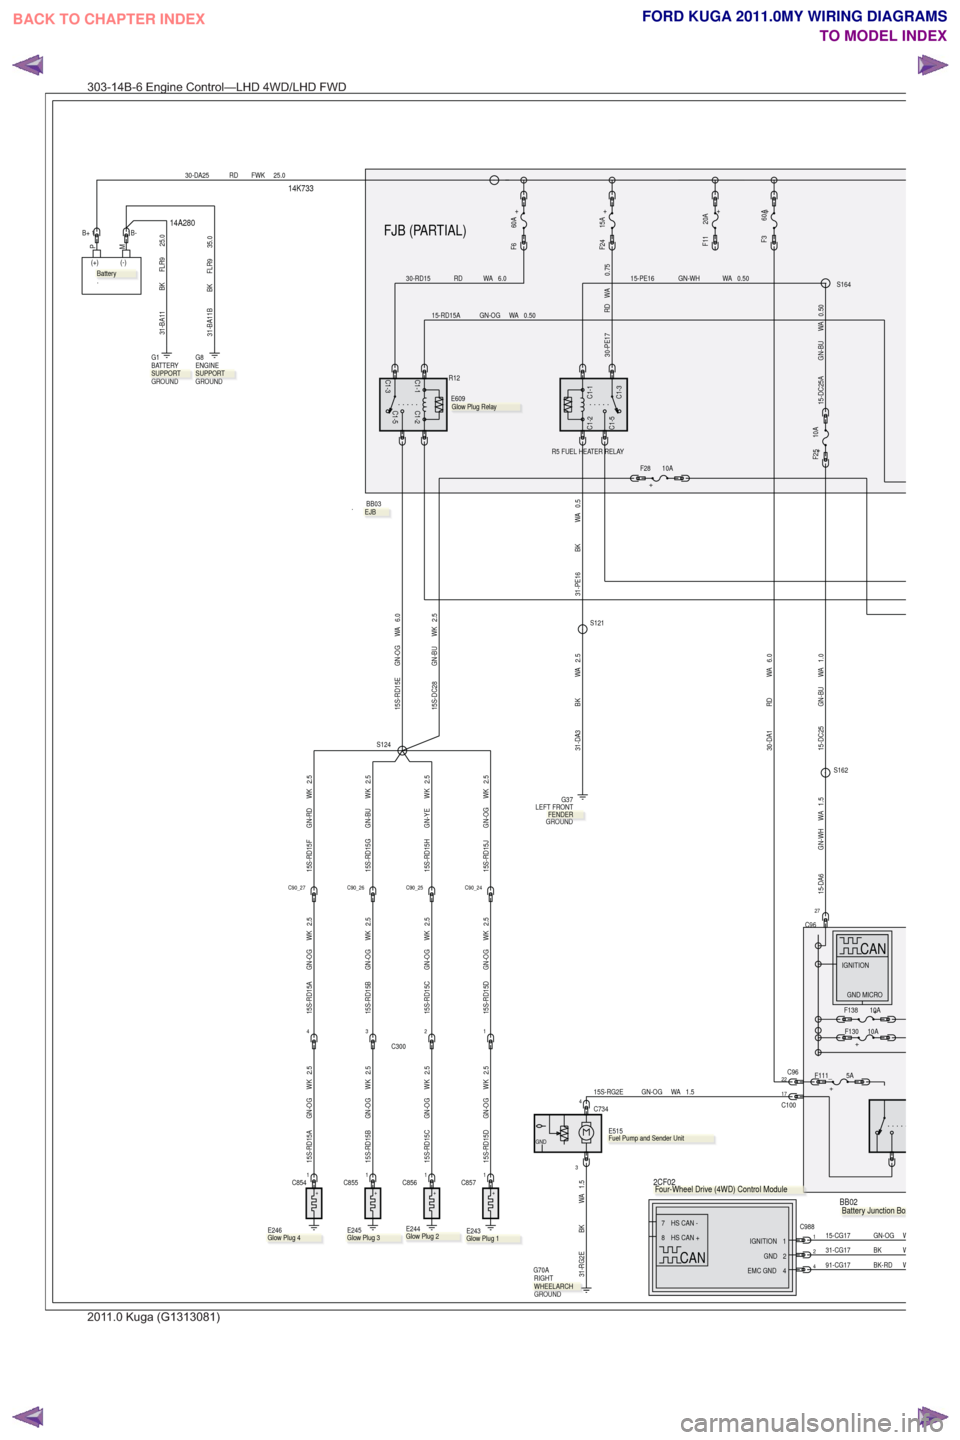 FORD KUGA 2011 1.G Wiring Diagram Owners Manual 14K733
14A280FJB (PARTIAL)
BB03
.
+
F6 60APM
(+) (-)
.
30-DA25 RD FWK 25.0
2.5WK
GN-OG
15S-RD15A2.5WK
GN-OG
15S-RD15B2.5WK
GN-OG
15S-RD15C2.5WK
GN-OG
15S-RD15D
+
.
E244
+
E246
.
1C8541C8561C857C8551
+